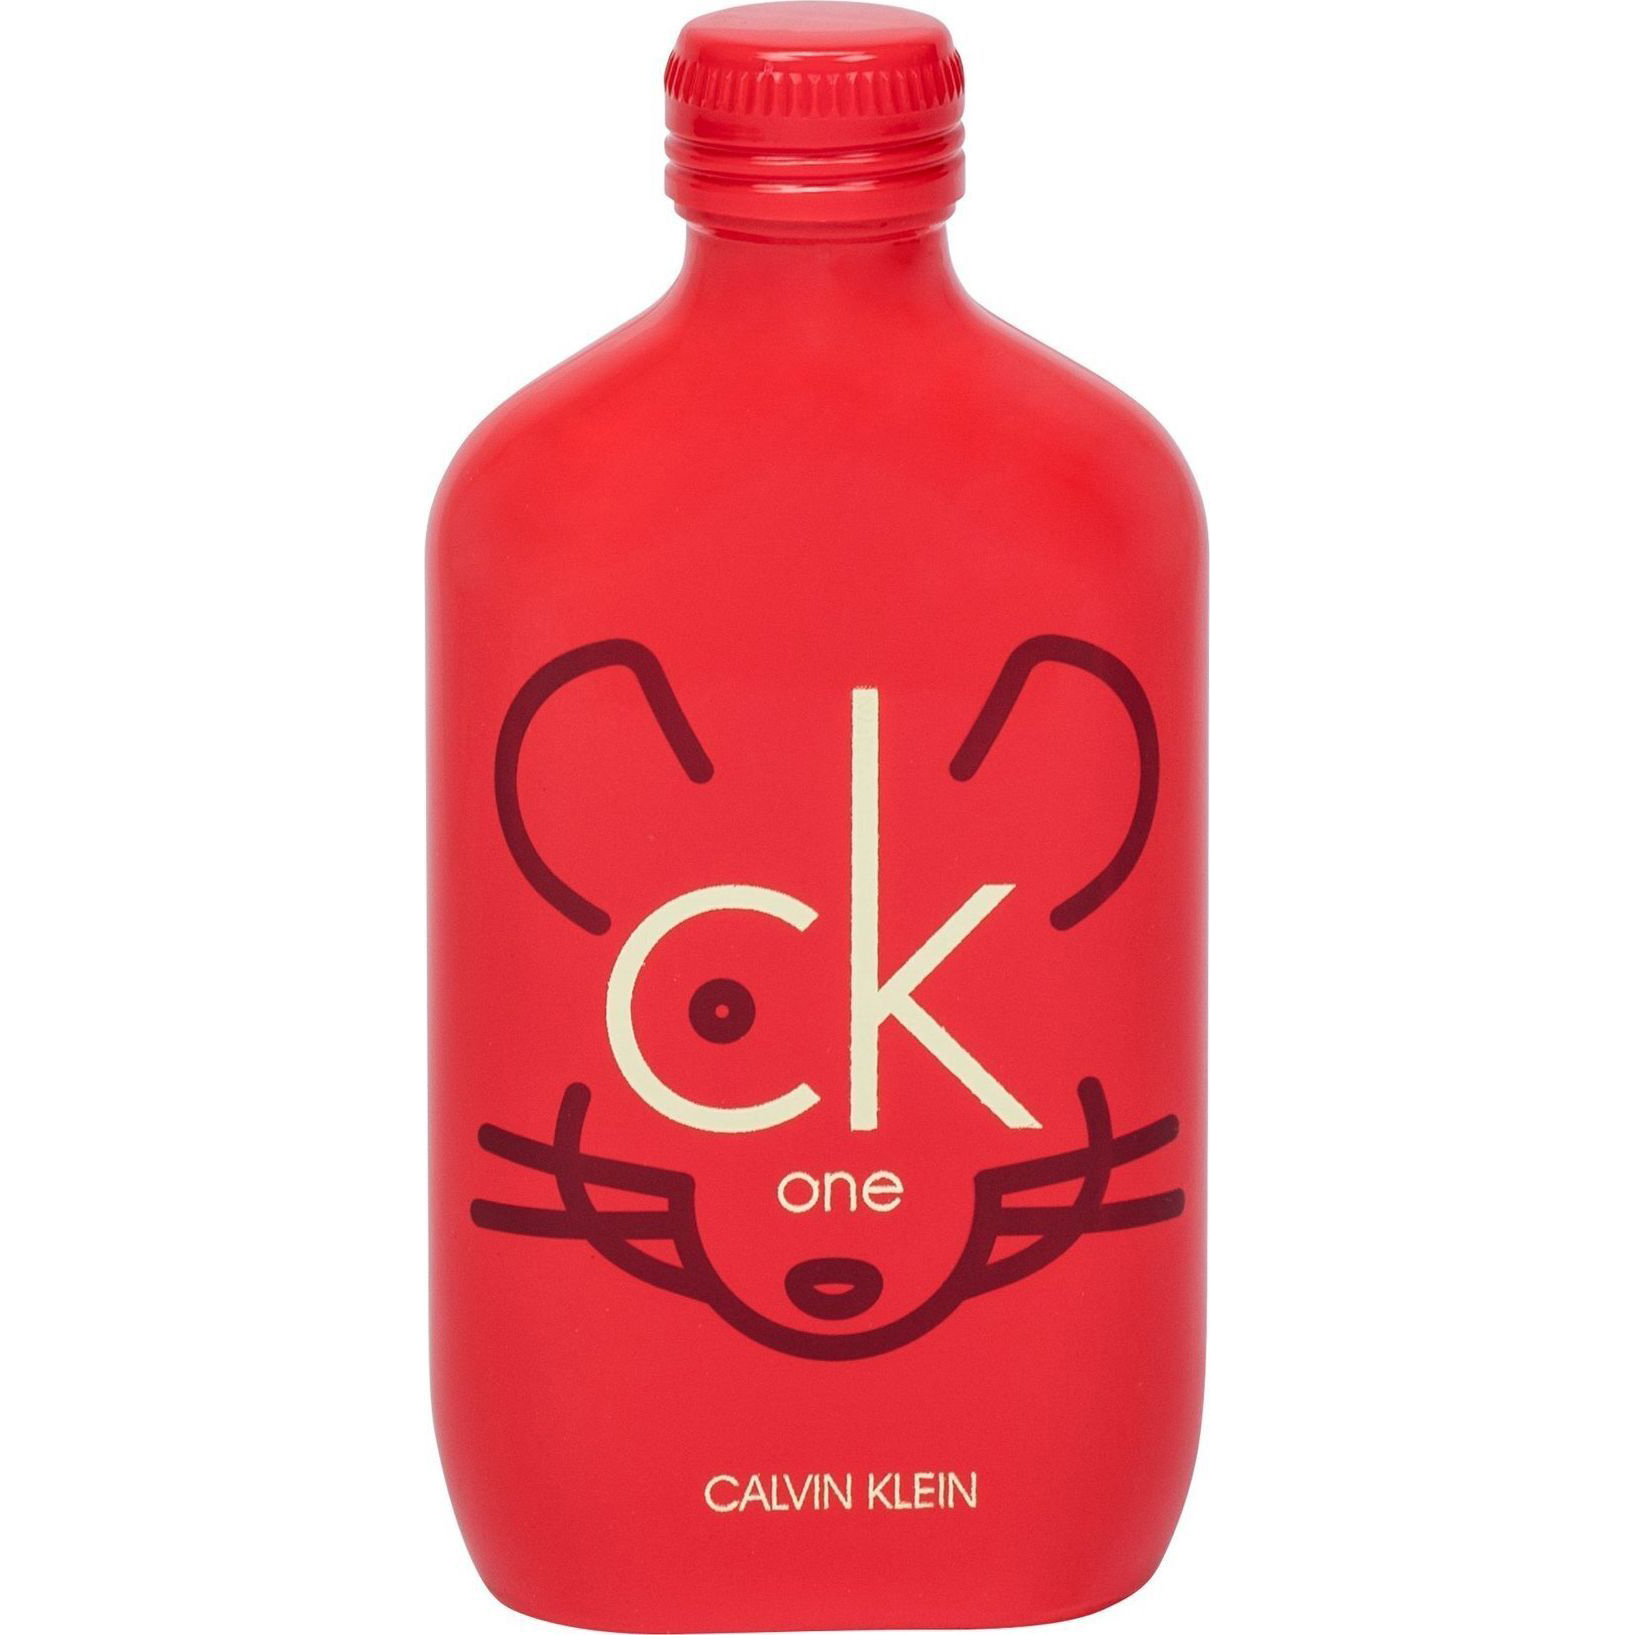 Calvin Klein CK One Chinese New Year 2020 Edition Edt 100ml